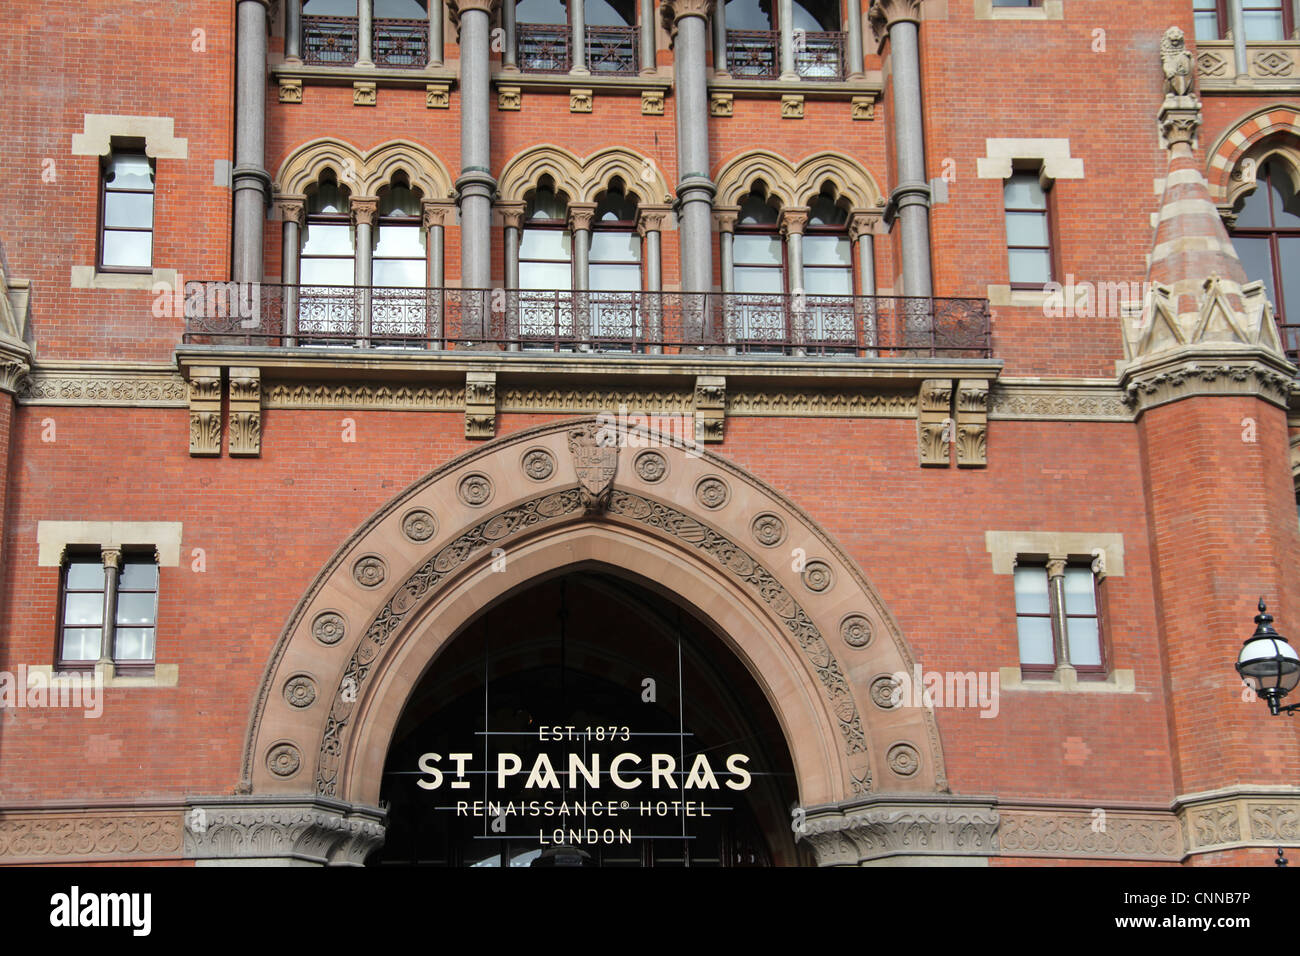 The St Pancras Renaissance Hotel in London Stock Photo